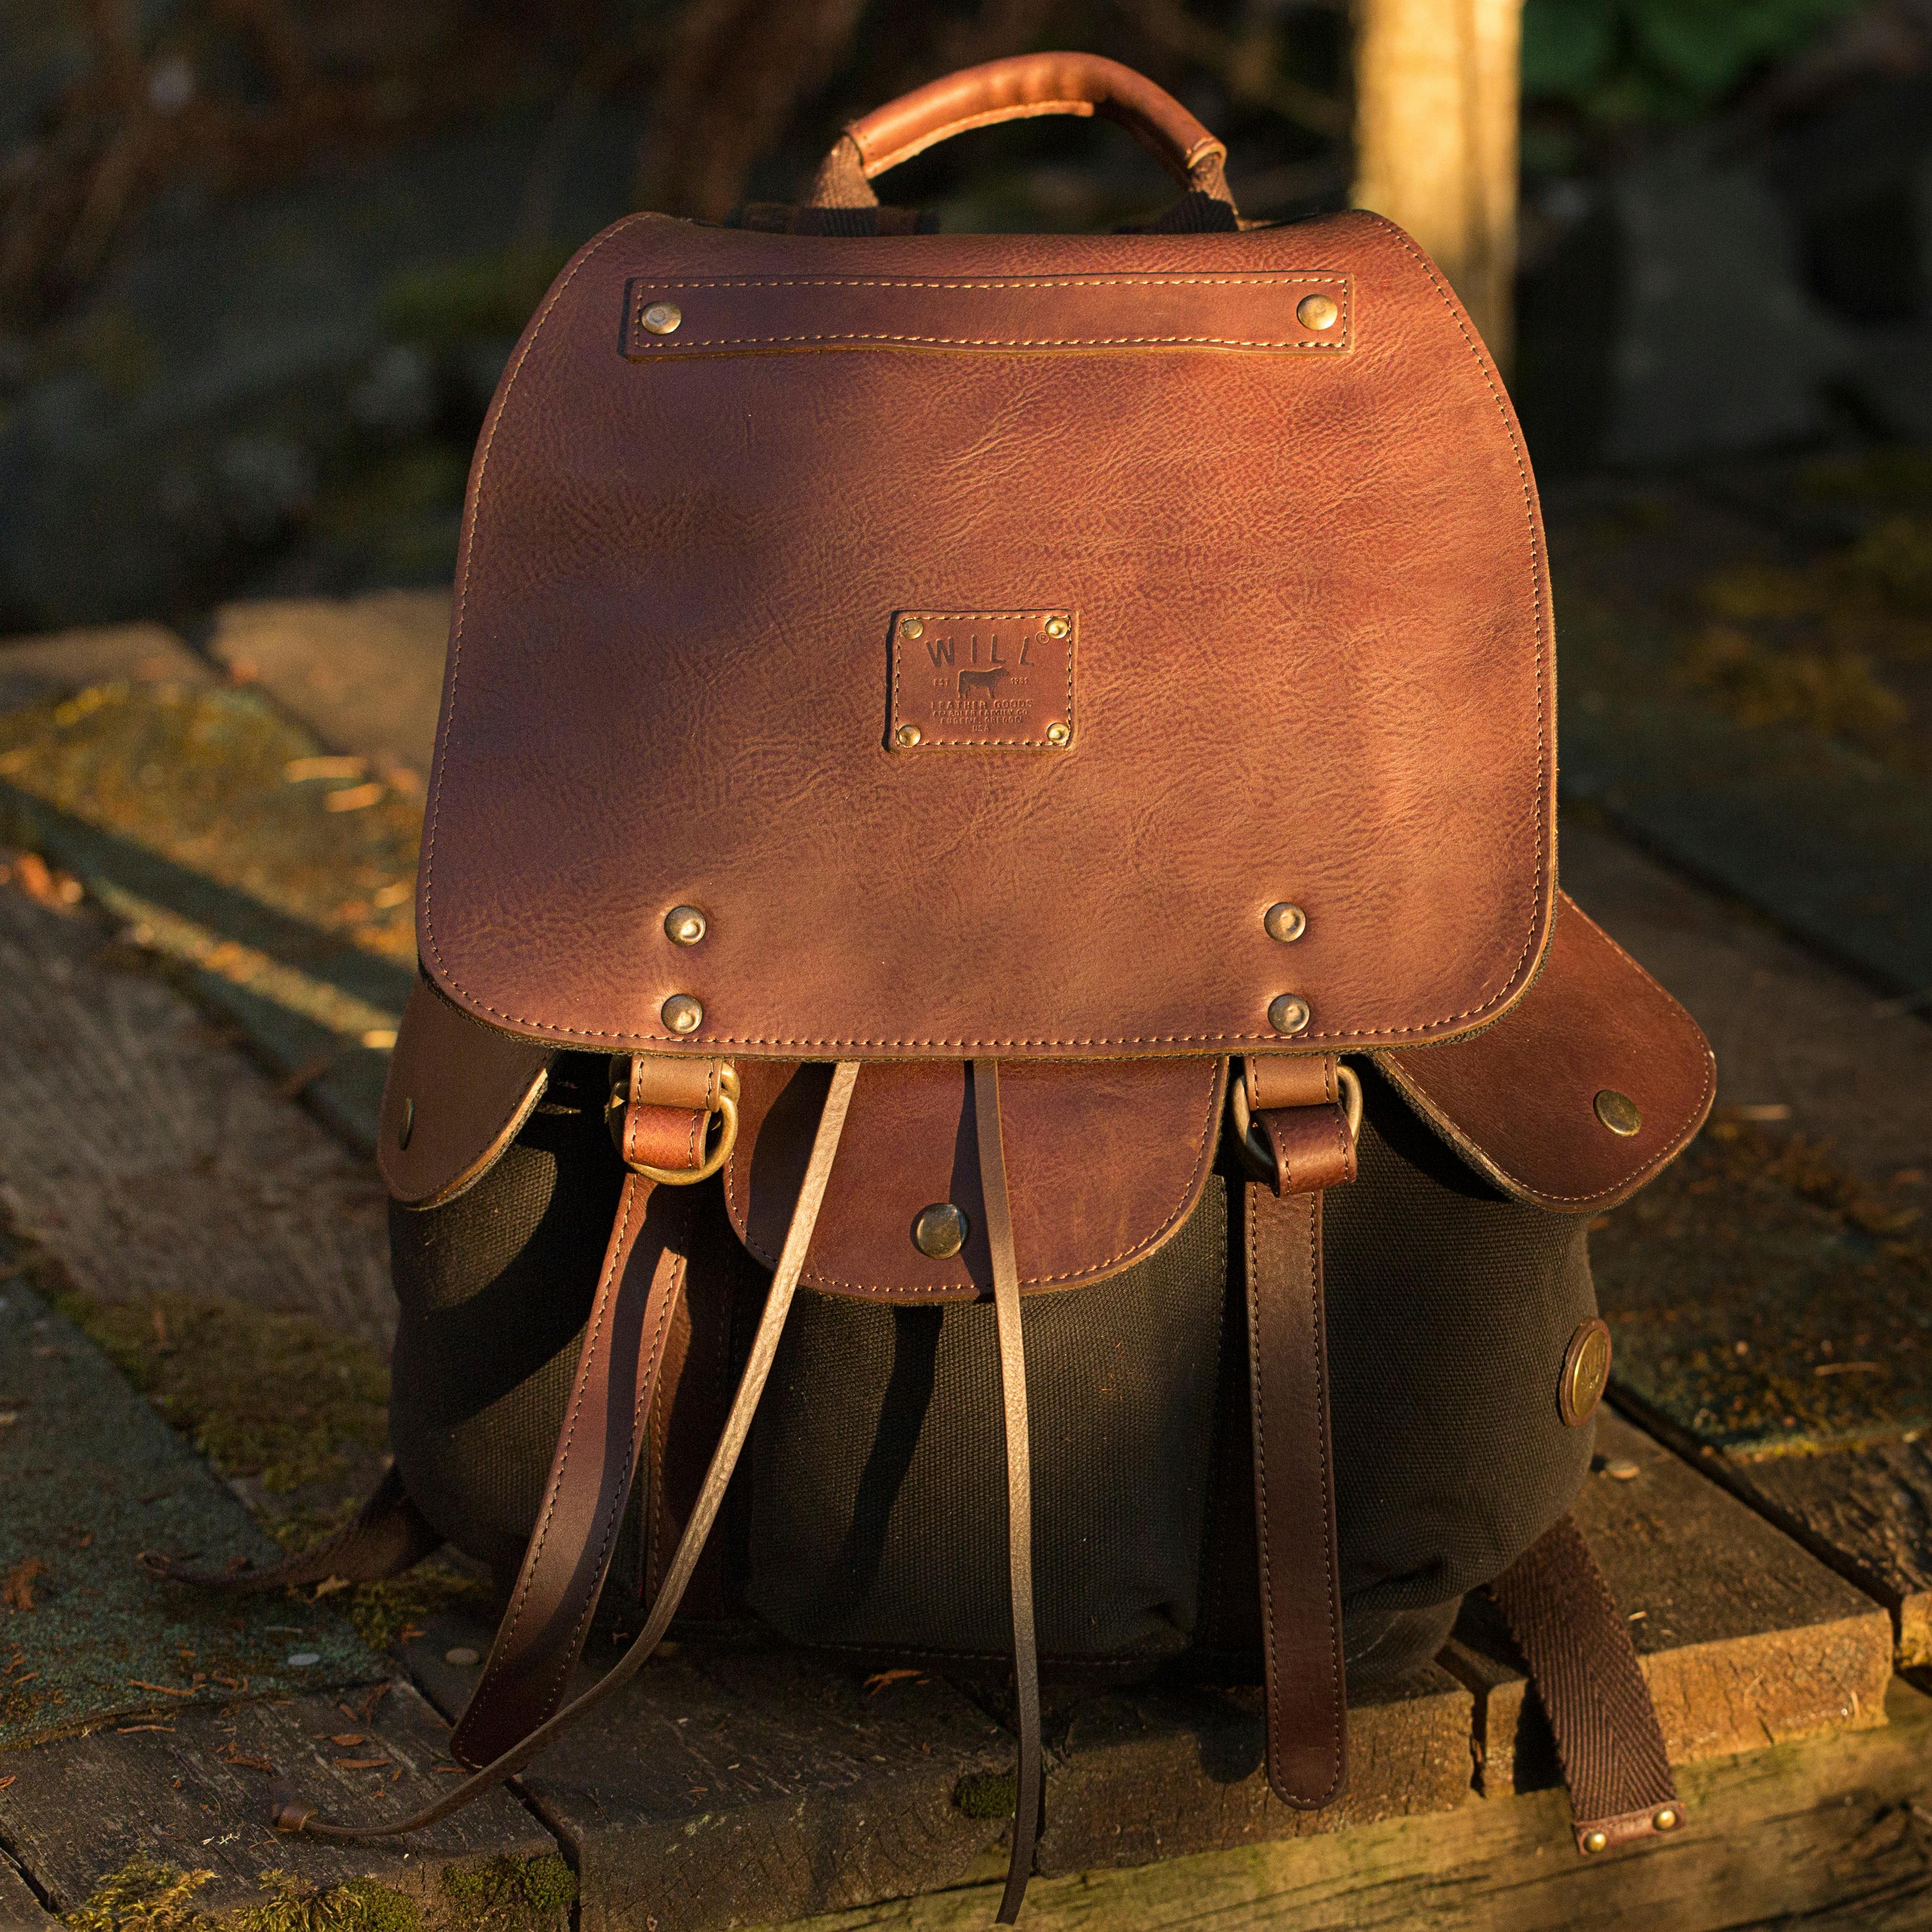 Will Leather Goods Lennon Backpack - Black/ Brown